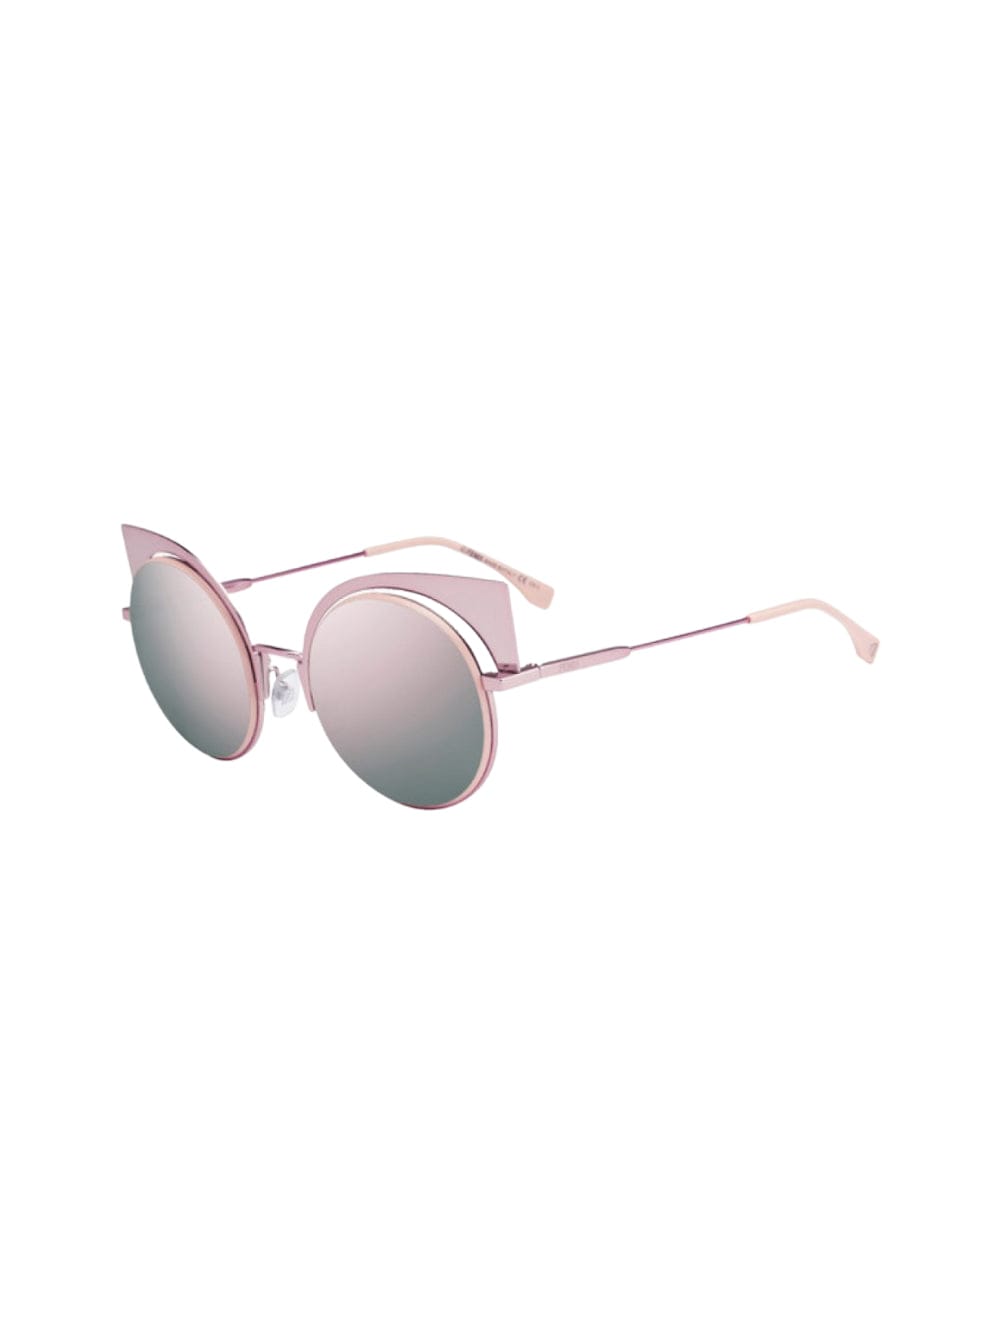 Fendi Ff 0177 - Metallic Pink Sunglasses